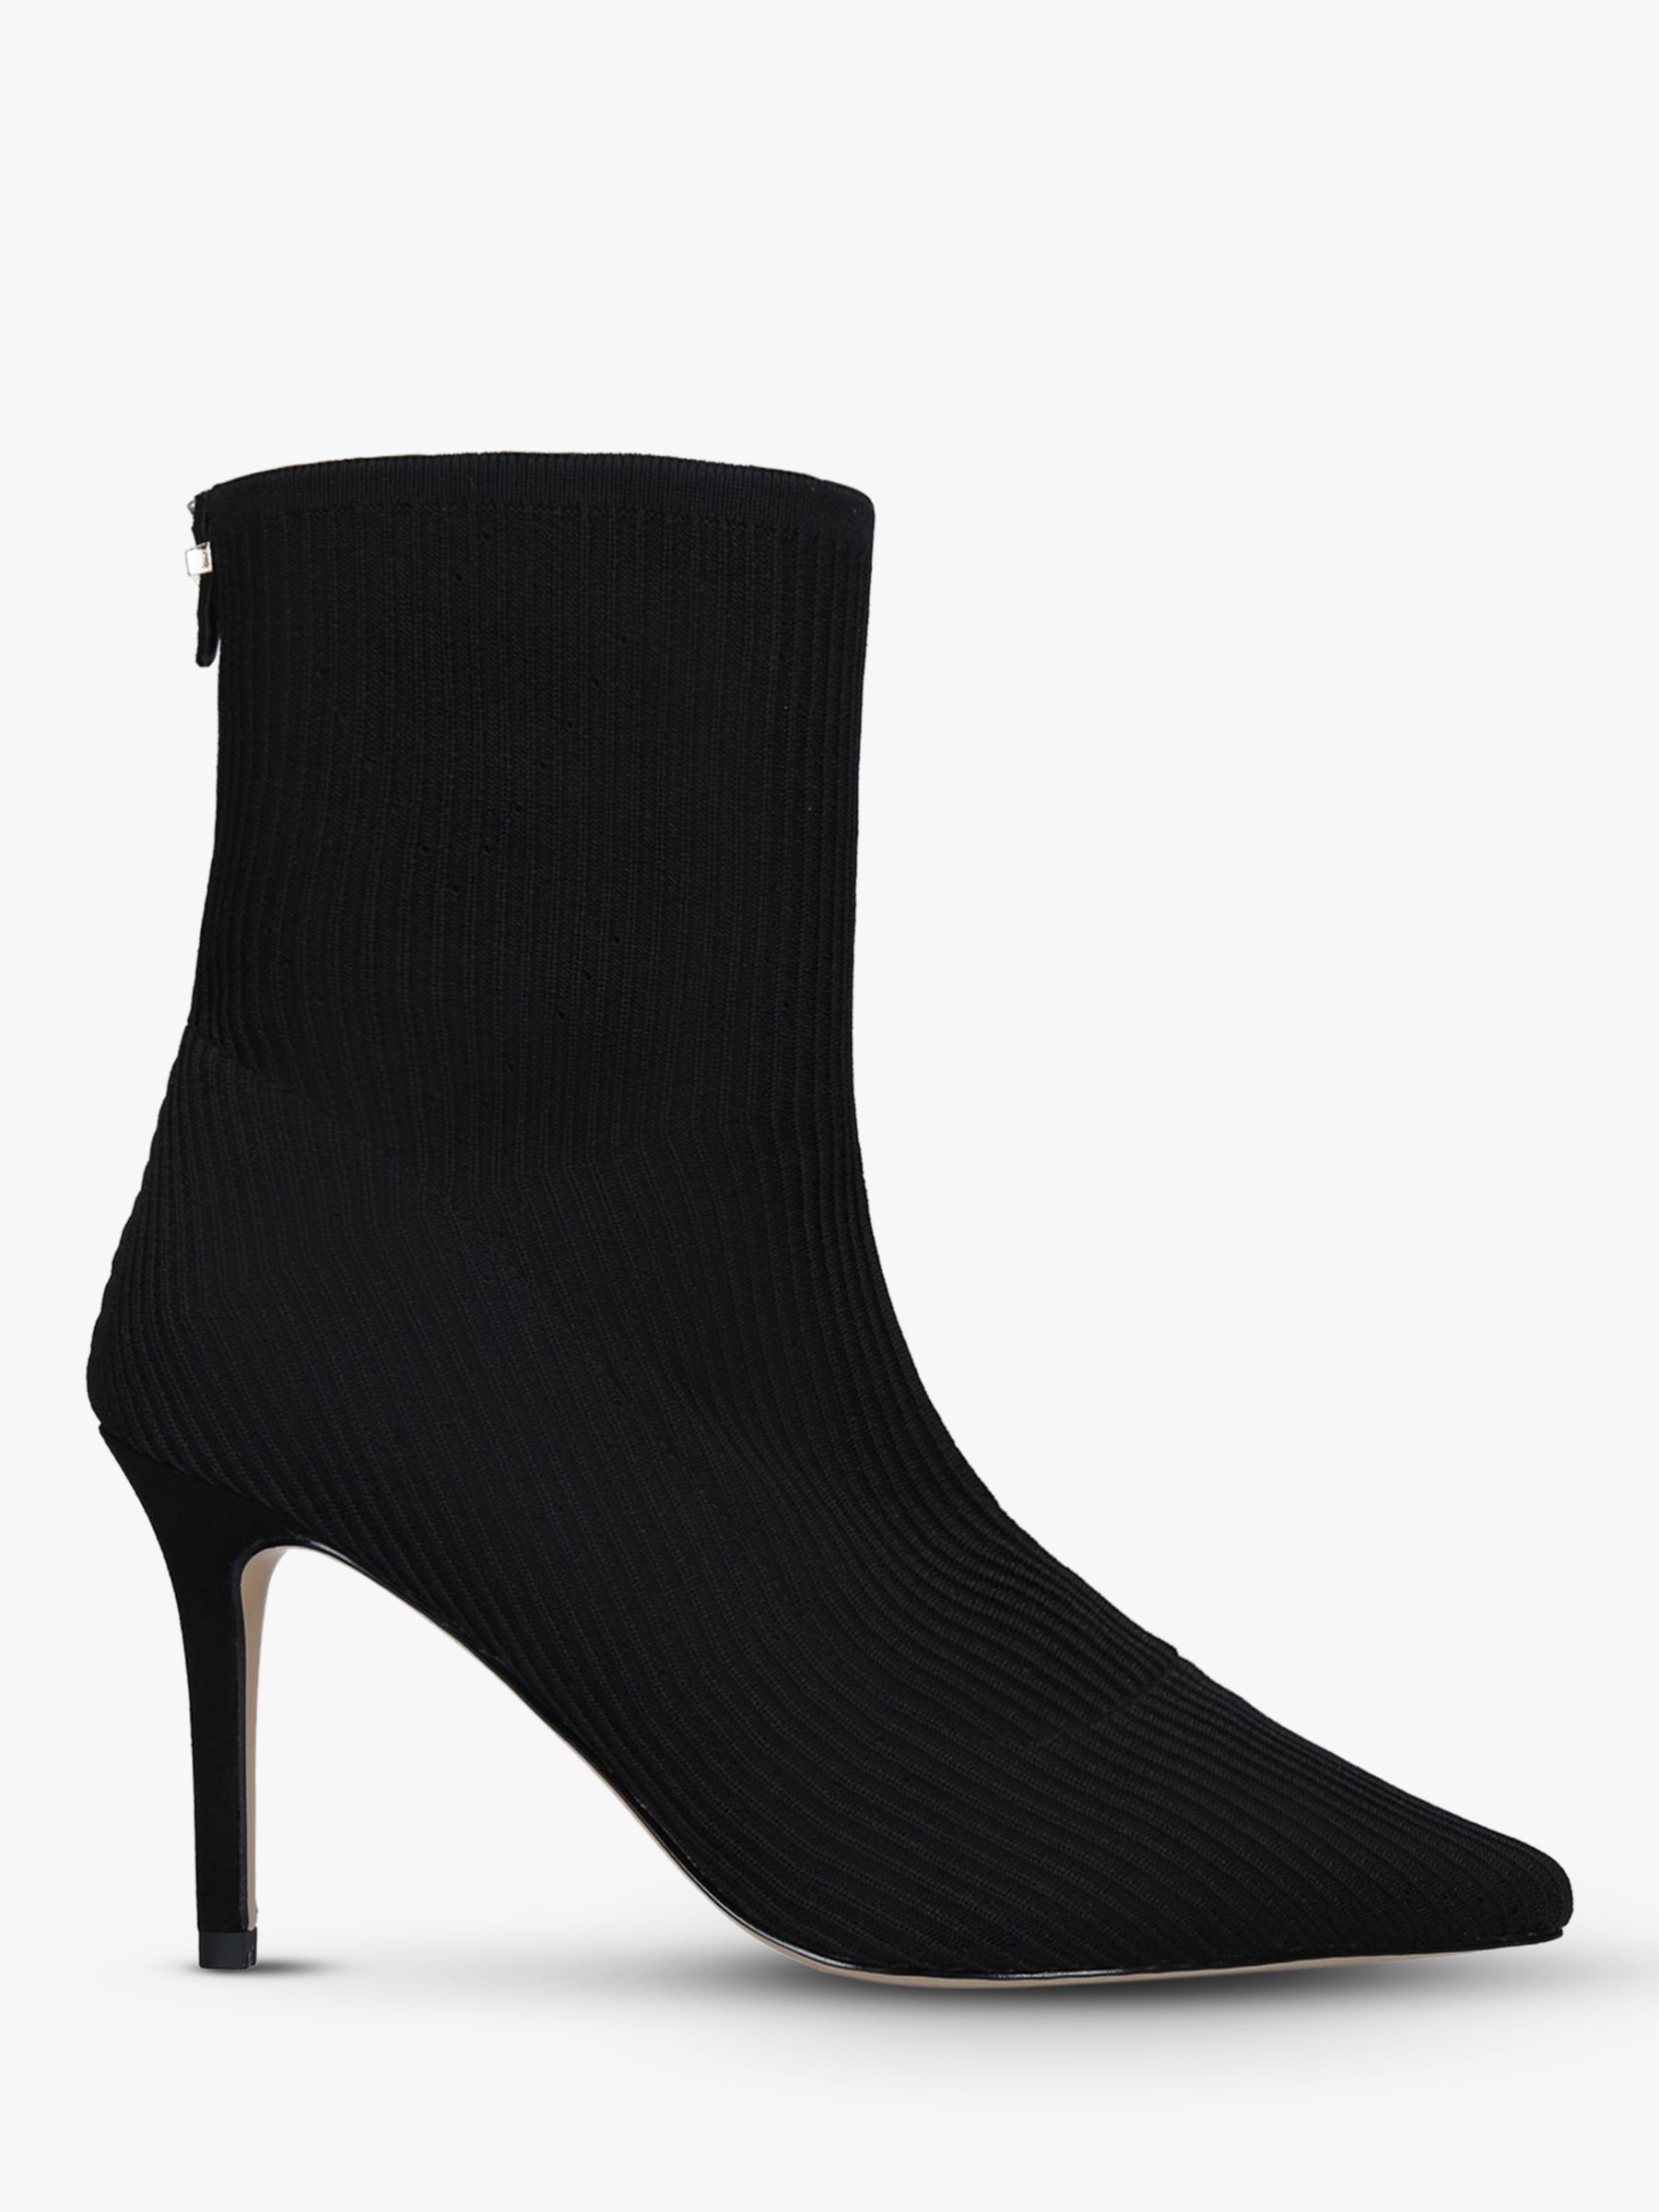 Carvela Sass Pointed Toe Stiletto Heel Boots, Black